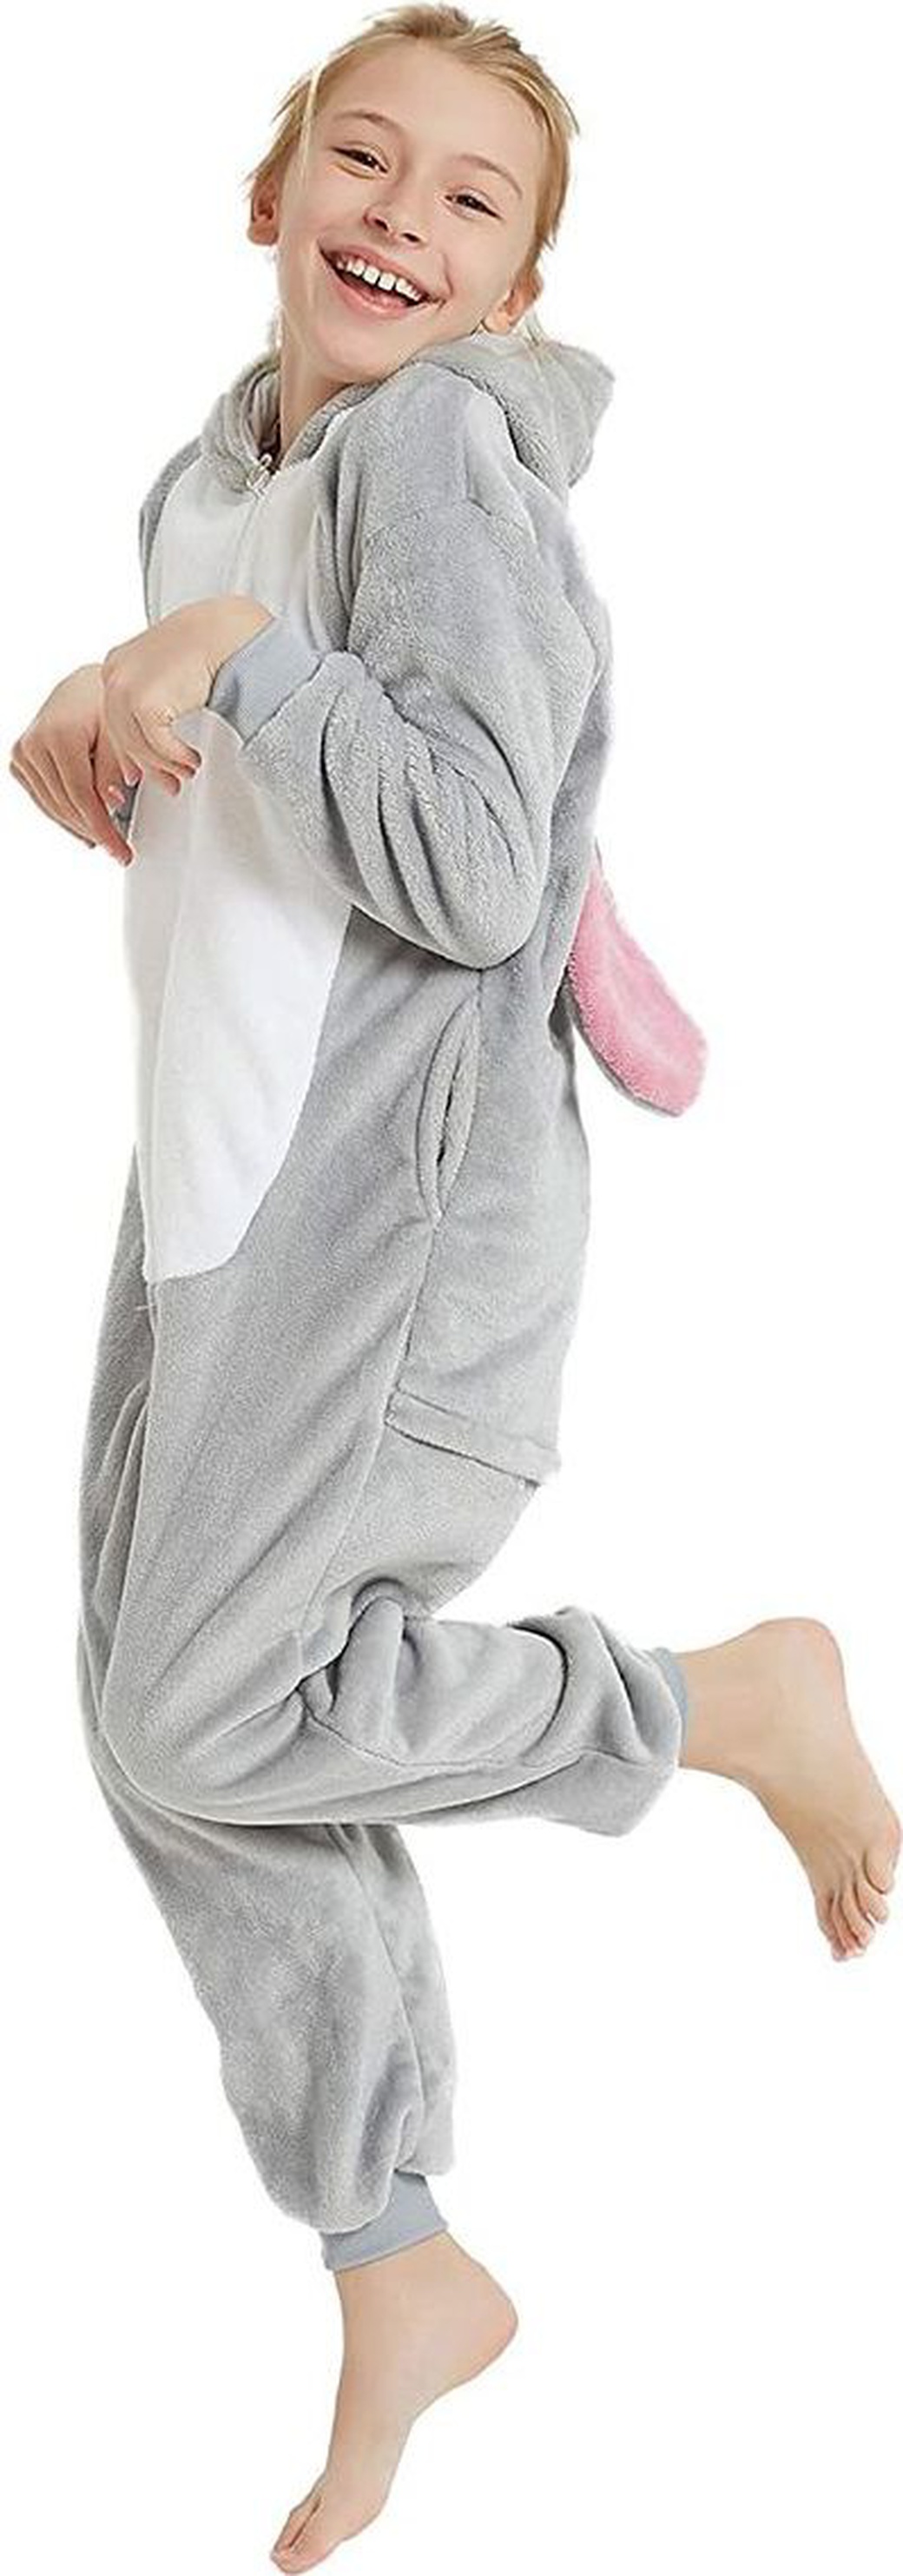 Кигуруми Зайчик Кролик Серый пижама кигуруми детская . Размер 100 см(3), 110 см(3), 120 см(5), 130 см(1).